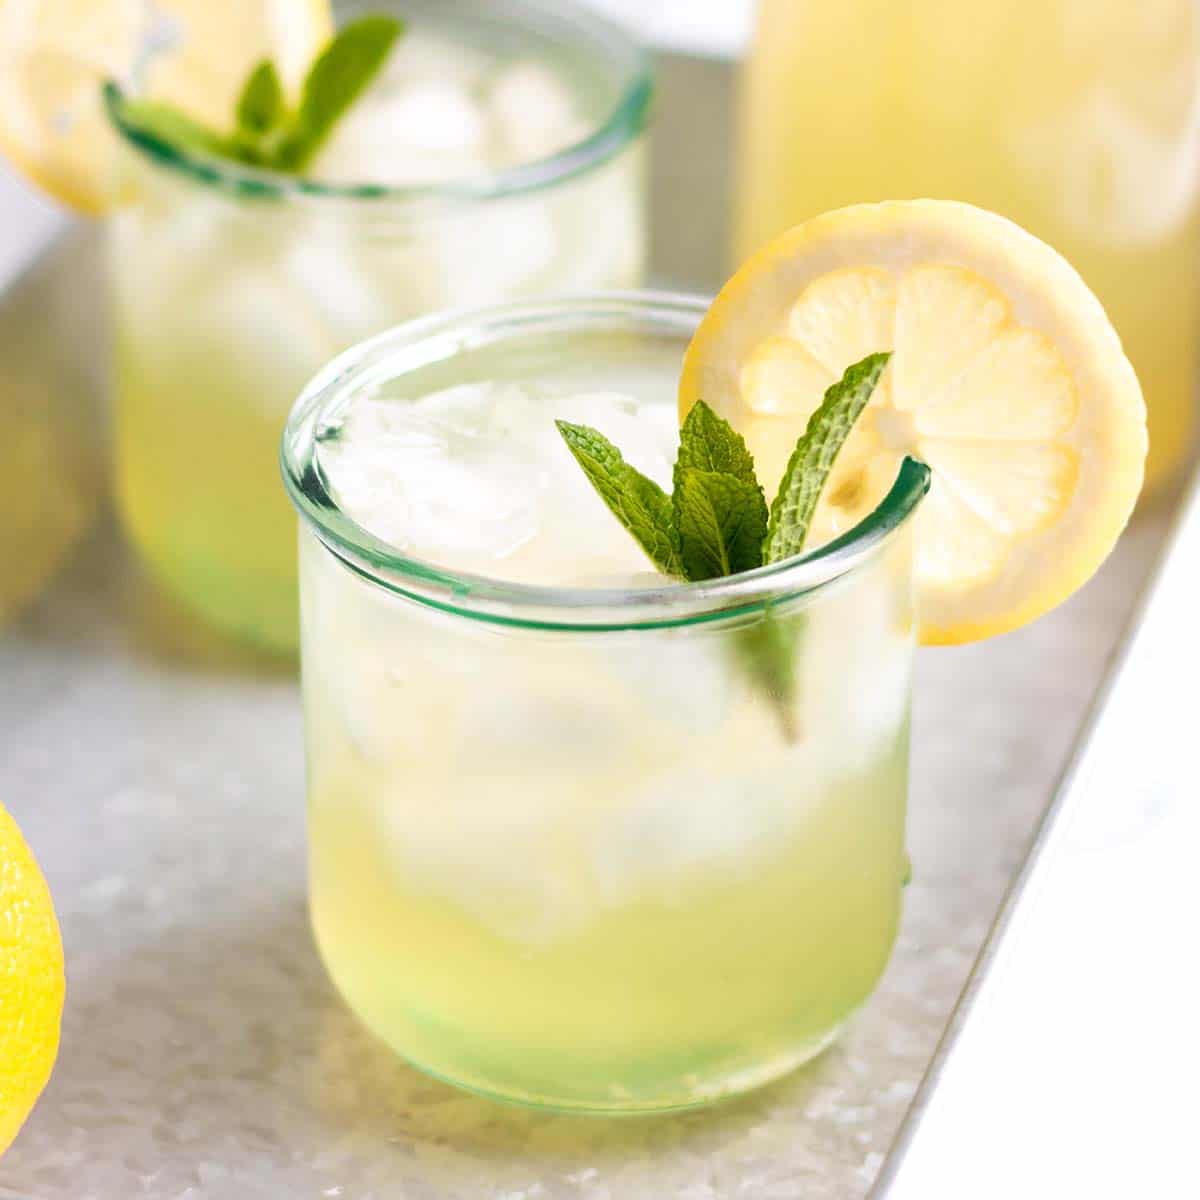 A glass of lemonade with a fresh lemon and mint.